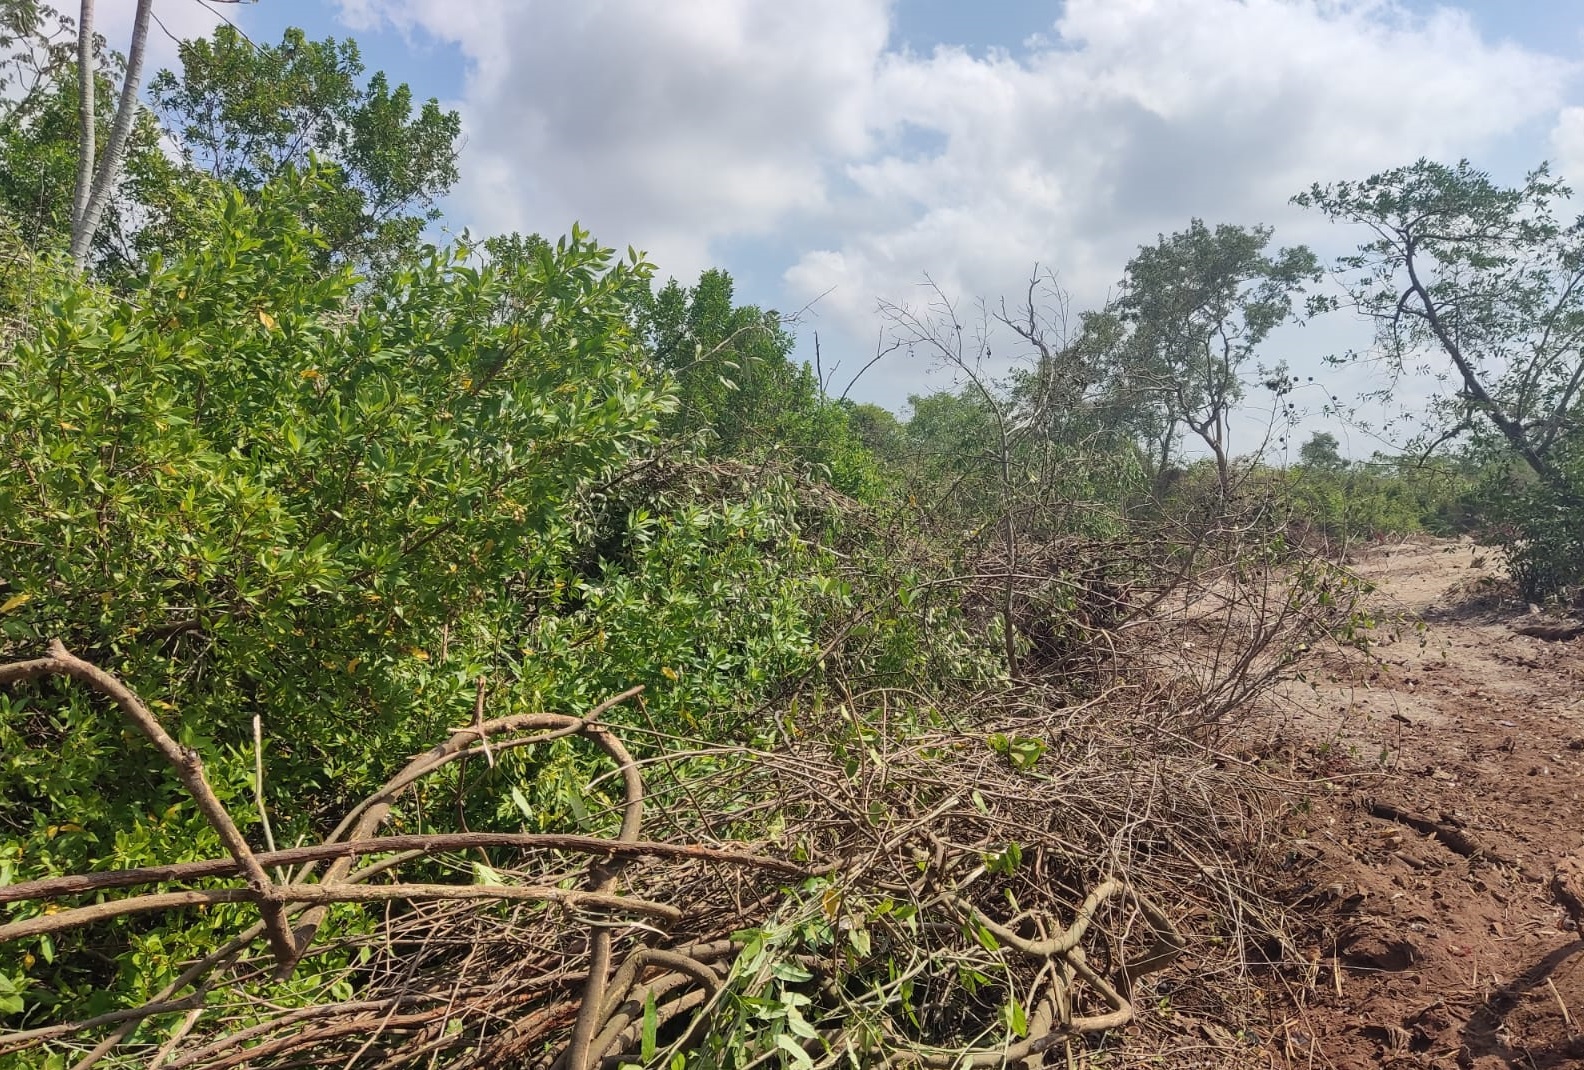 Desastre ambiental ocasionado: Playa Chiquita, La Chorrera. MiAmbiente investiga